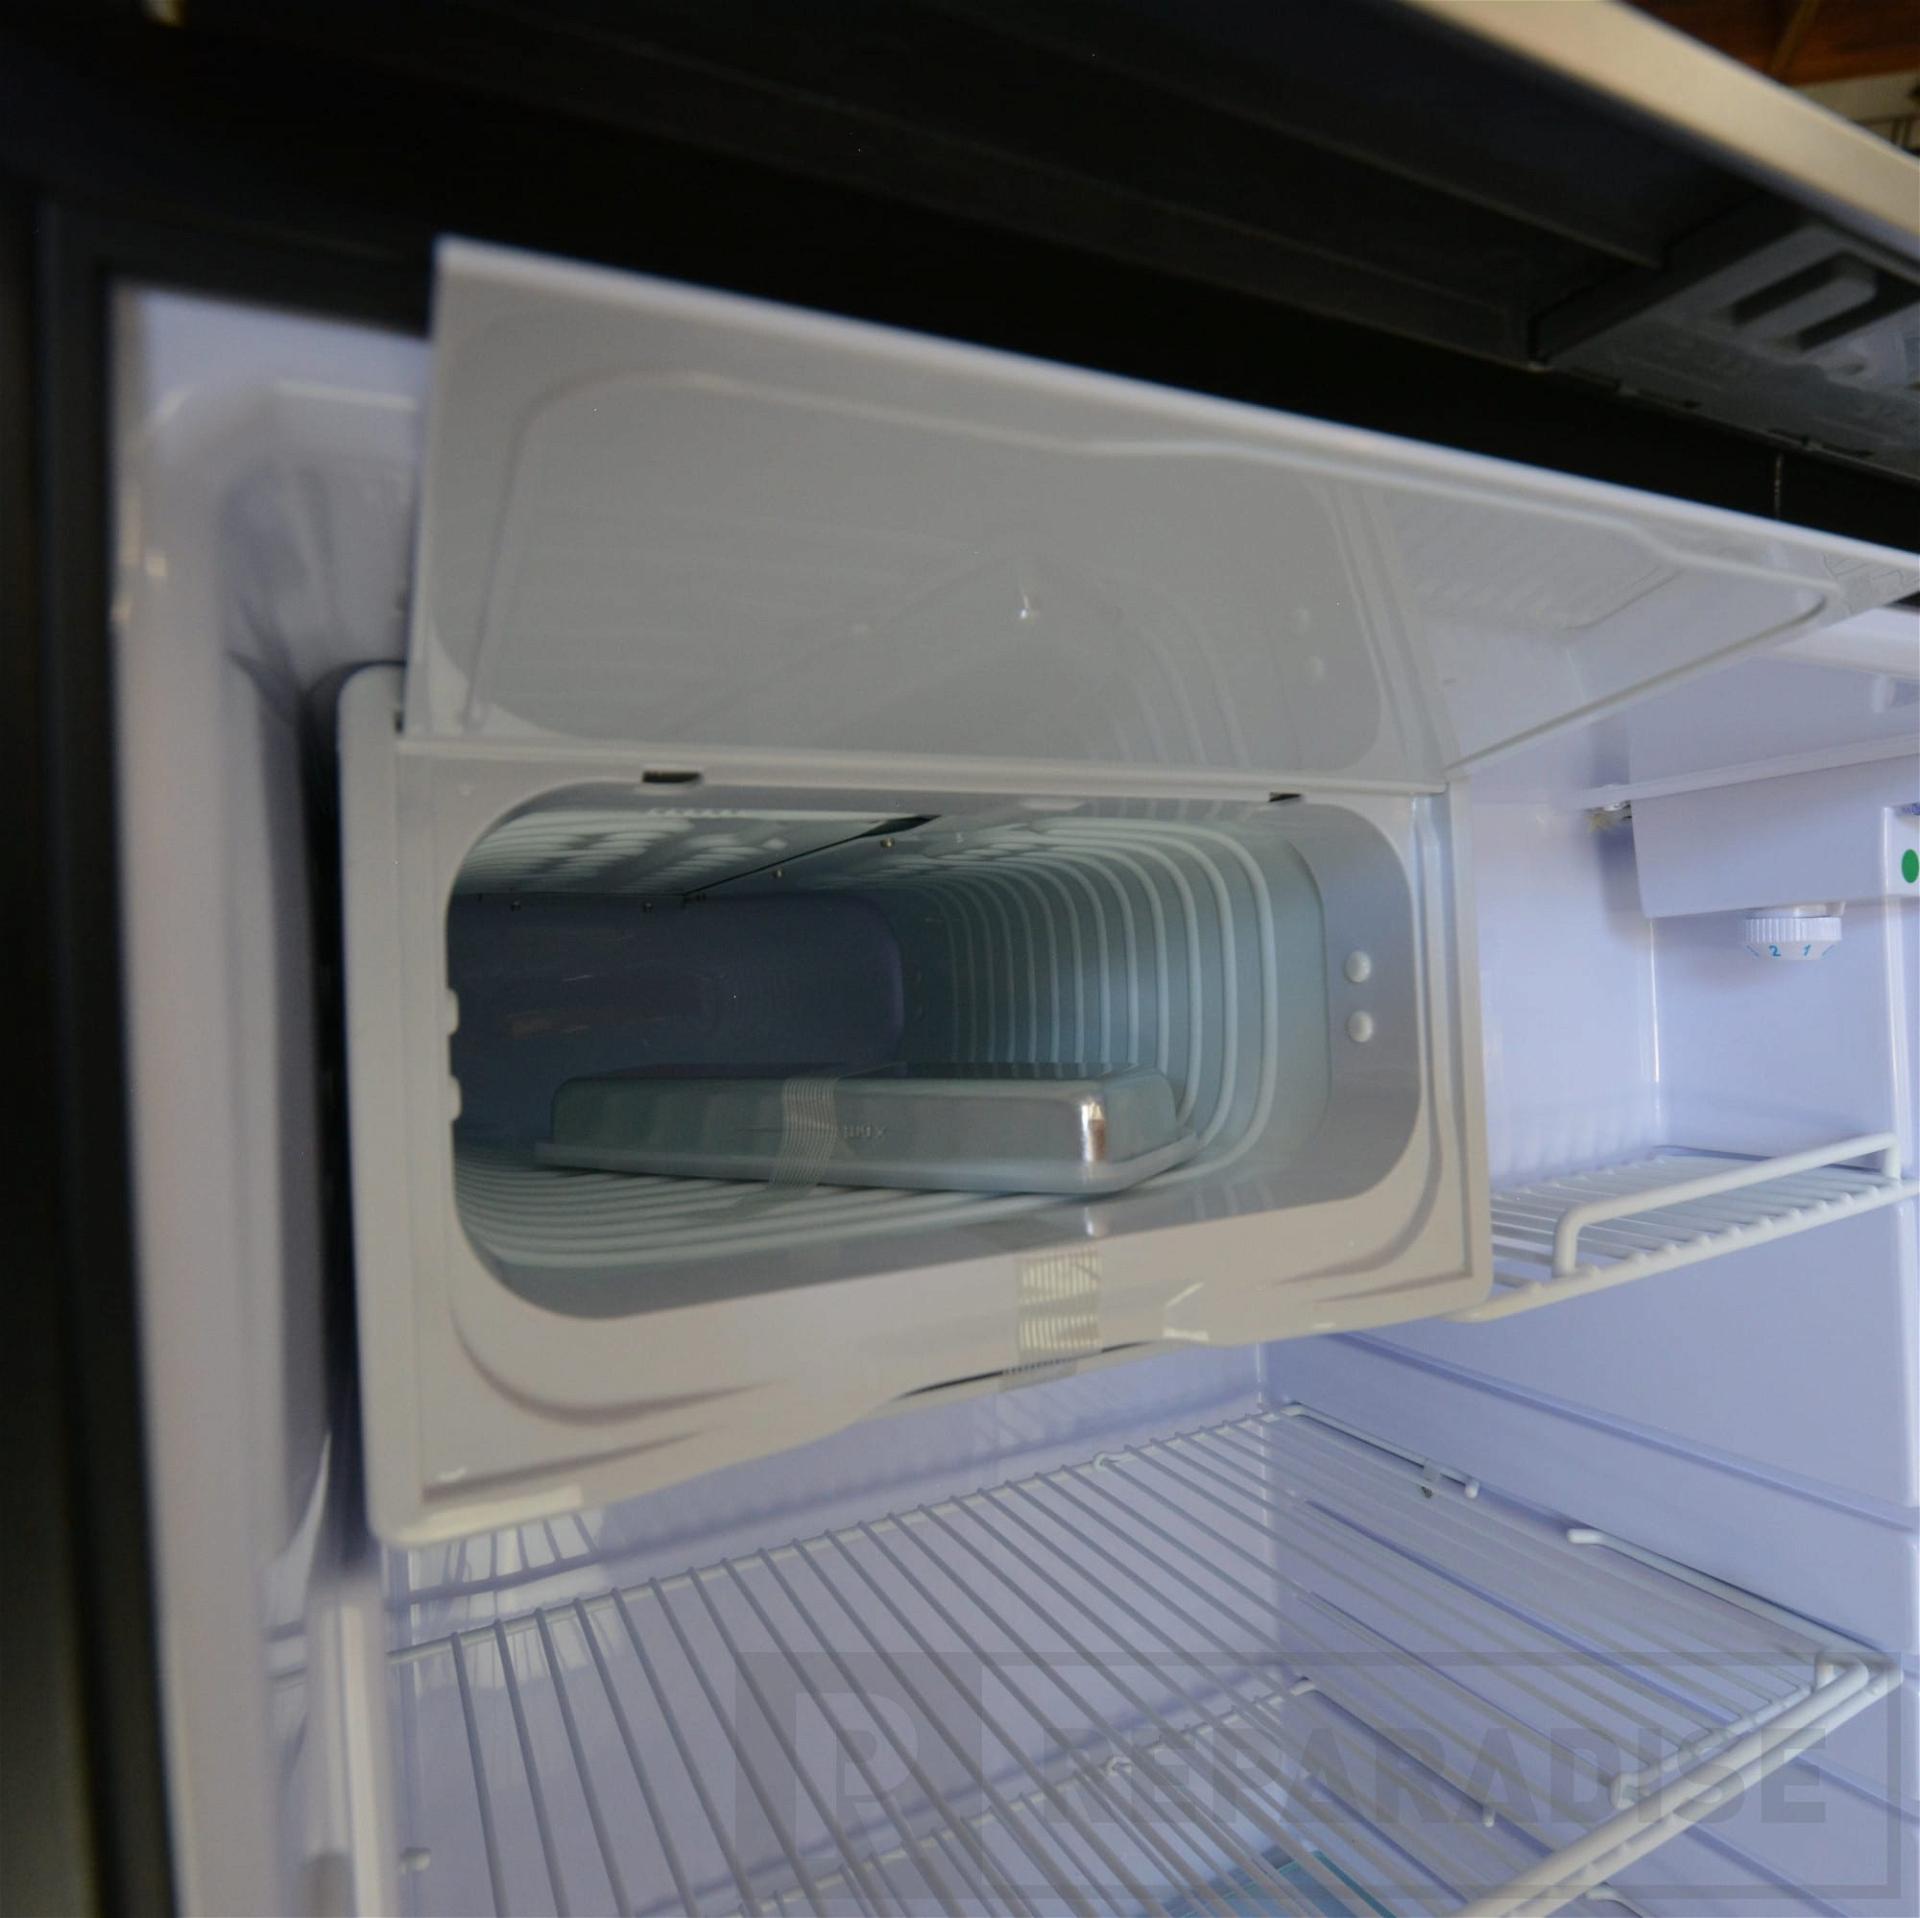 Isotherm Cruise 130 Elegance Refrigerator / Freezer - 4.6 Cu ft, Silver, AC/DC